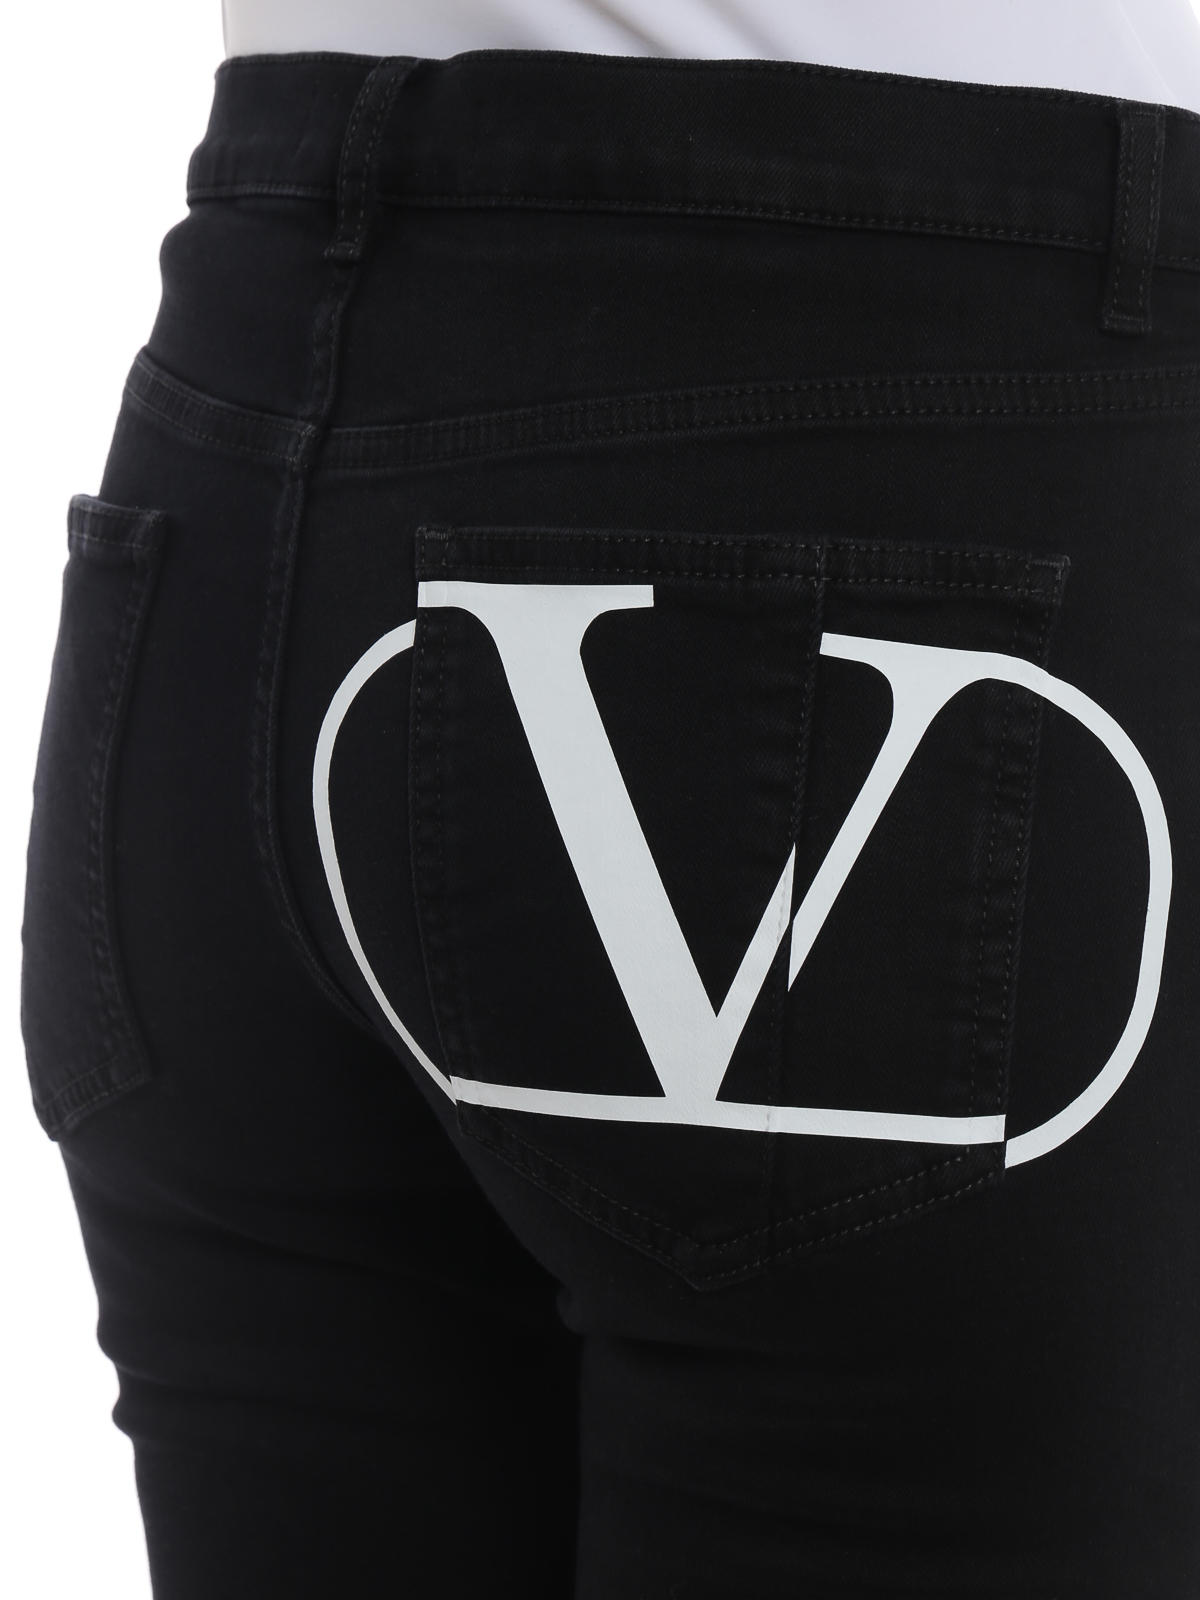 valentino black jeans